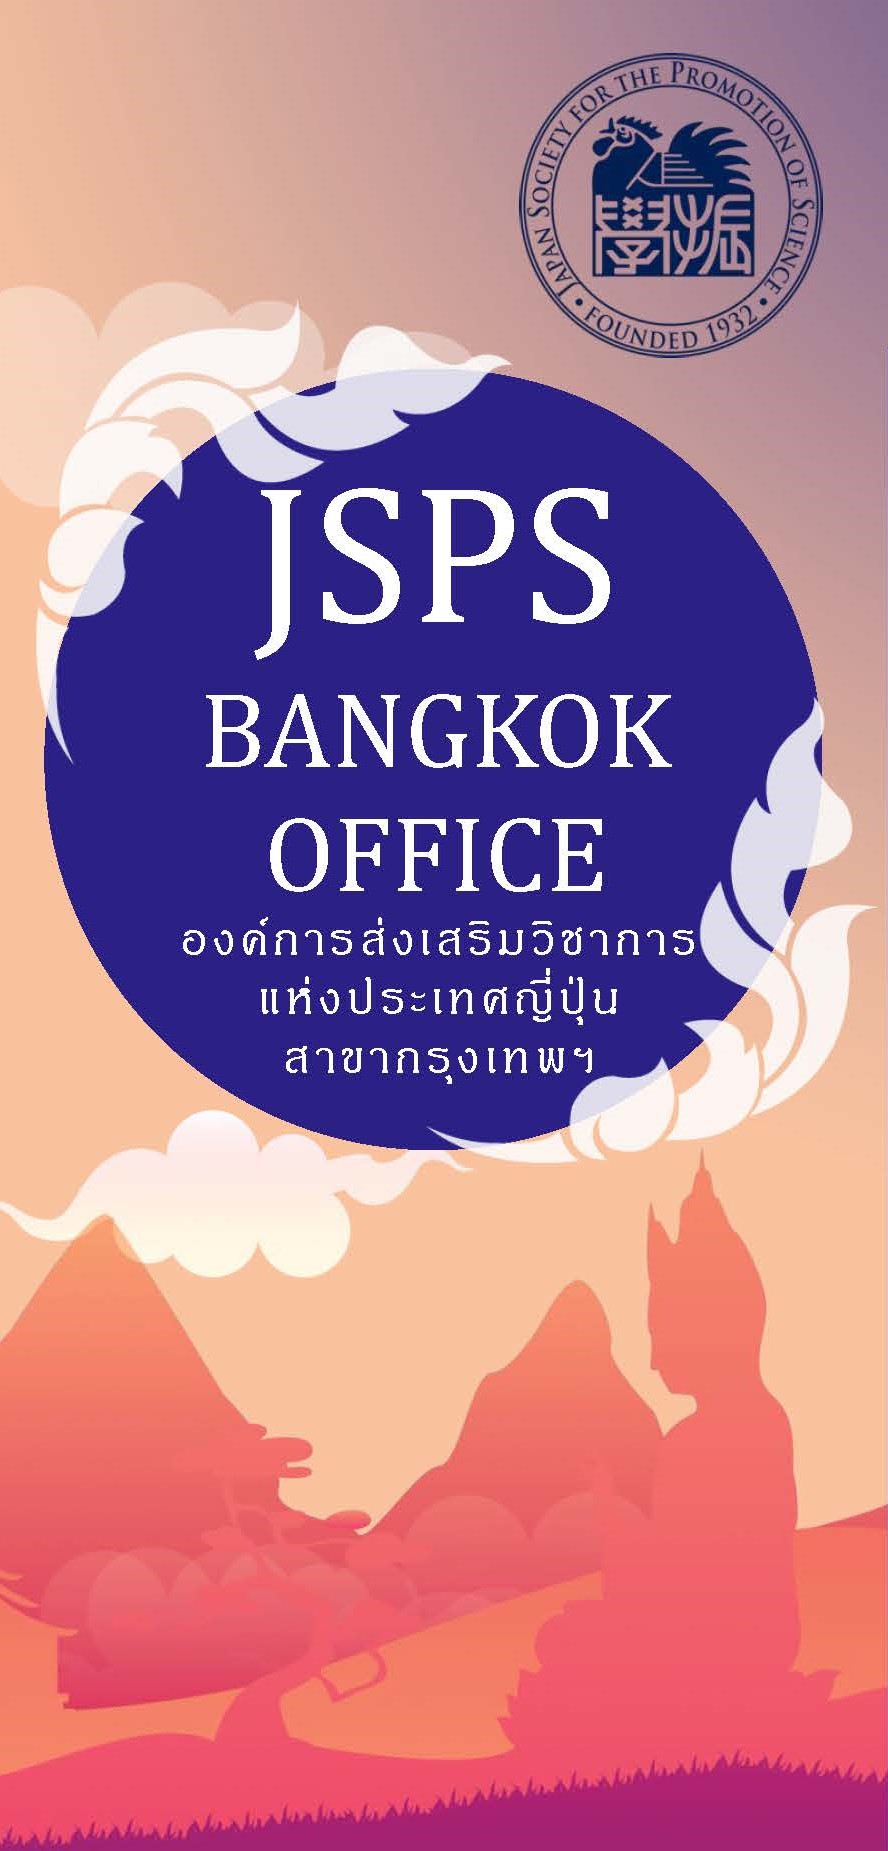 JSPSバンコク研究連絡センターの案内（タイ語版）